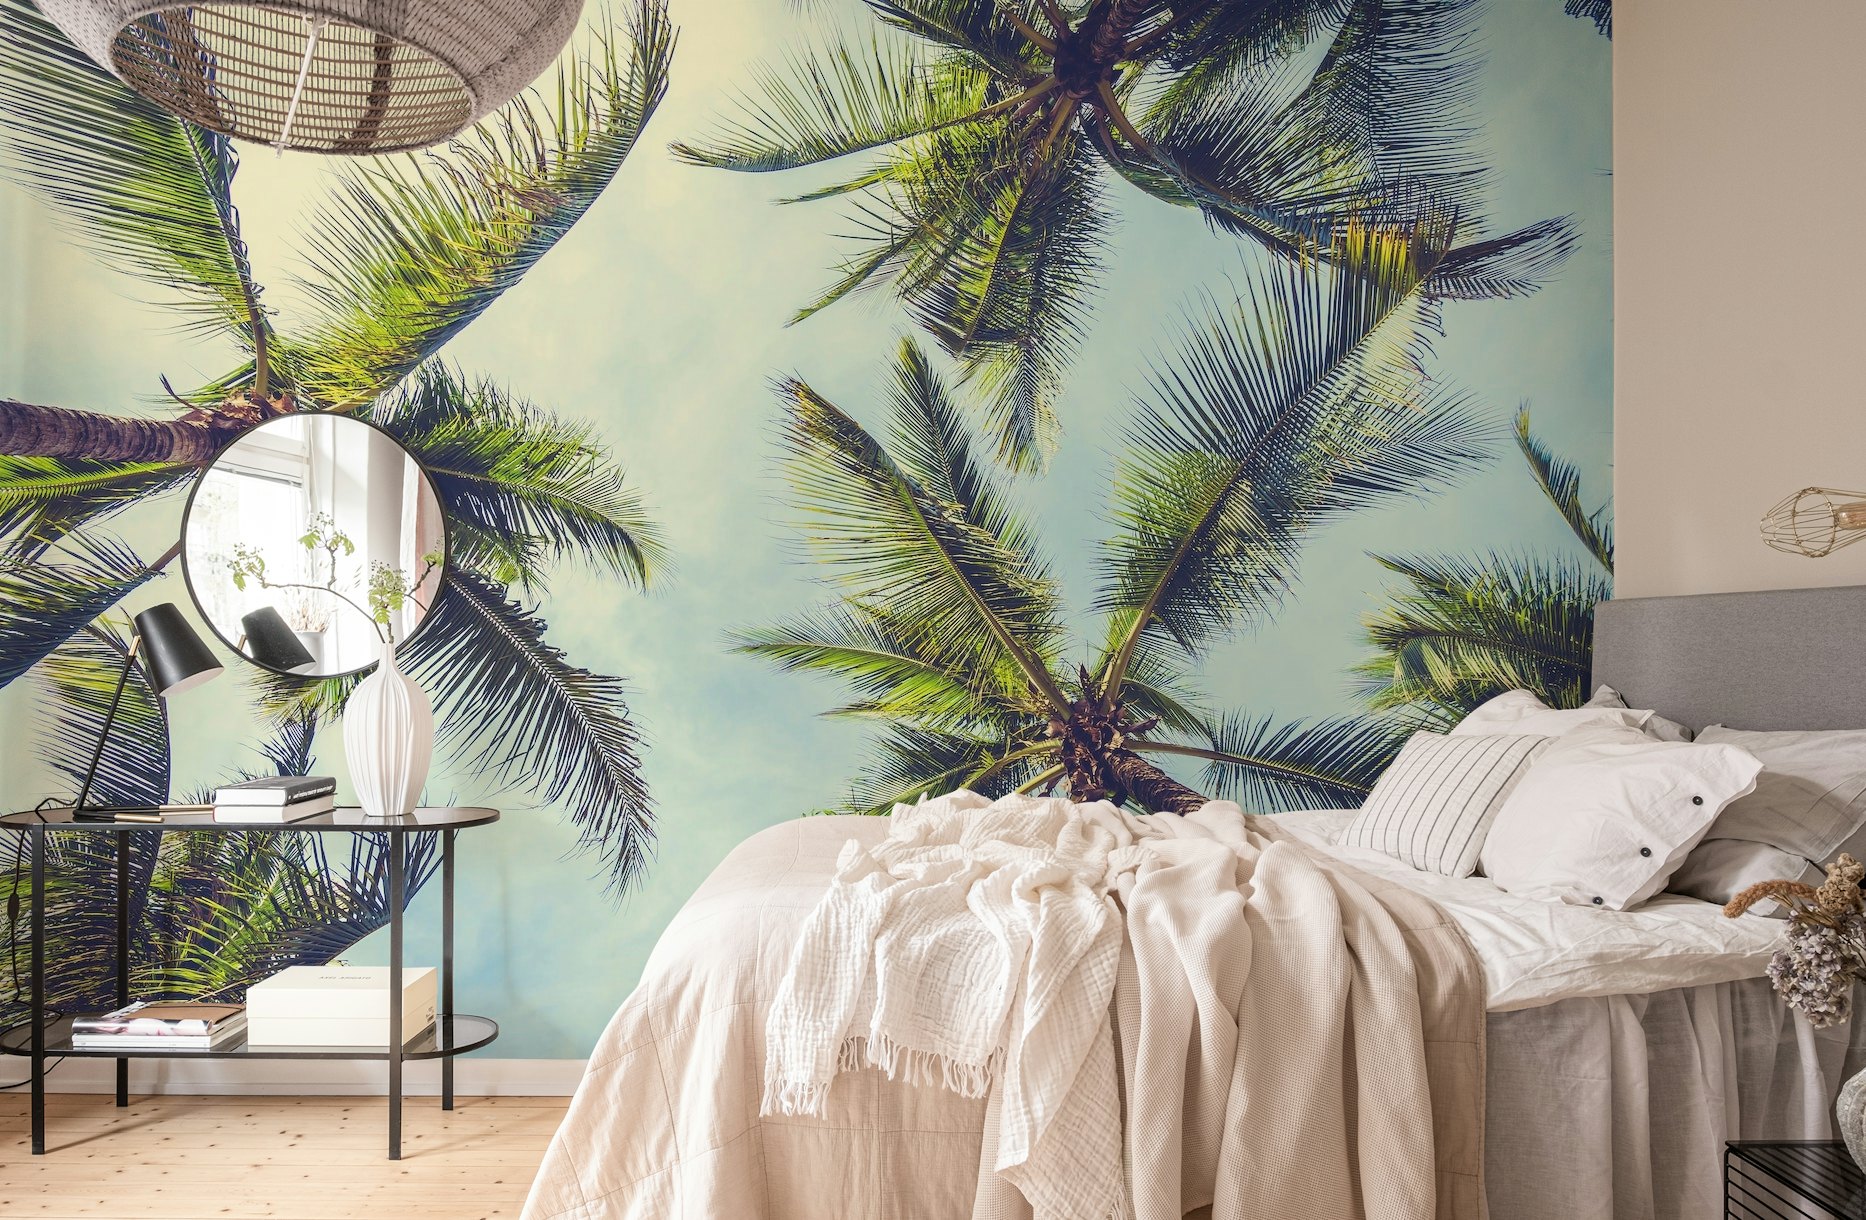 The Palms wallpaper